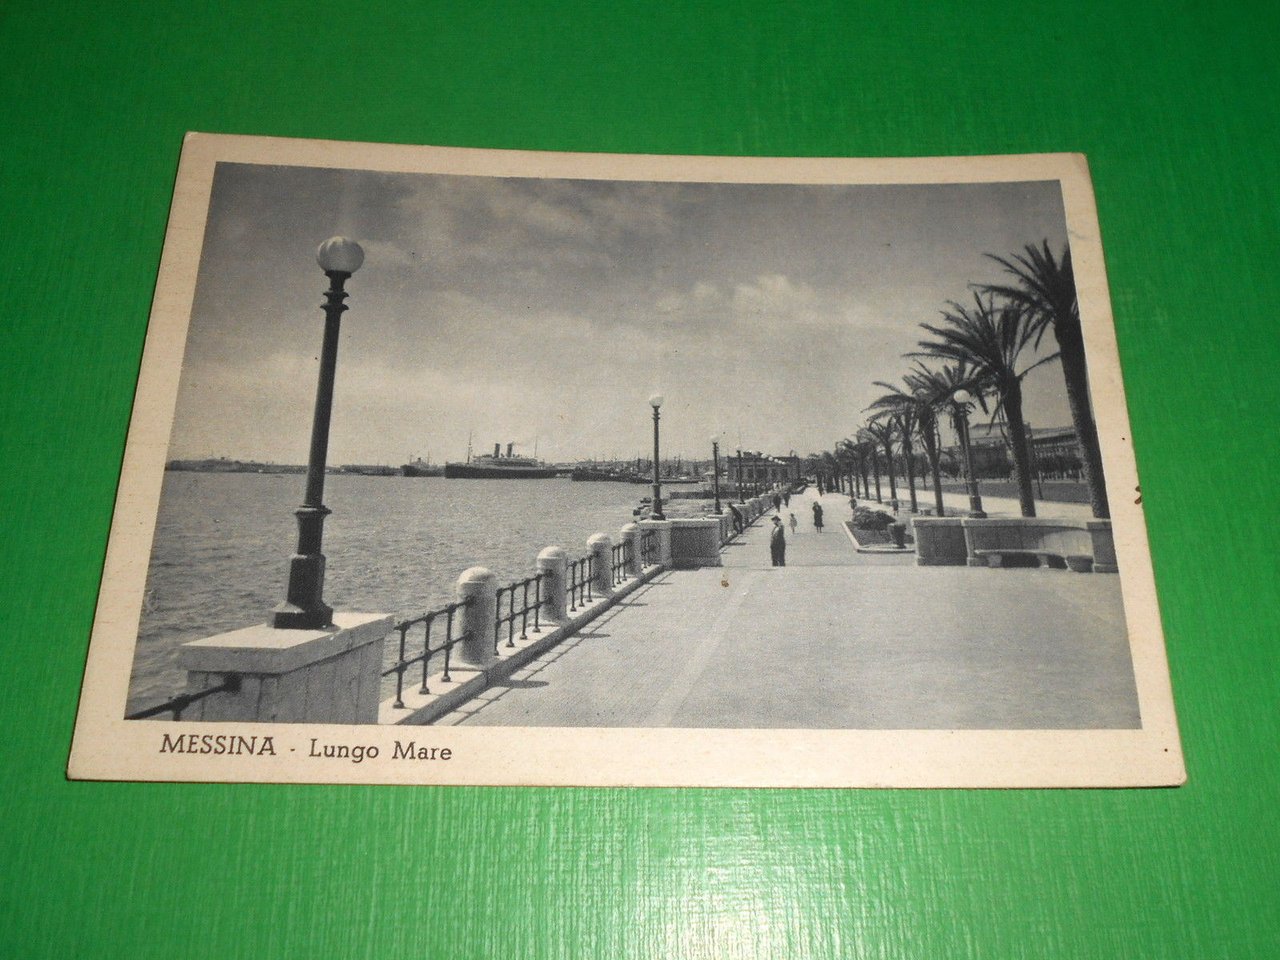 Cartolina Messina - Lungo mare 1941.